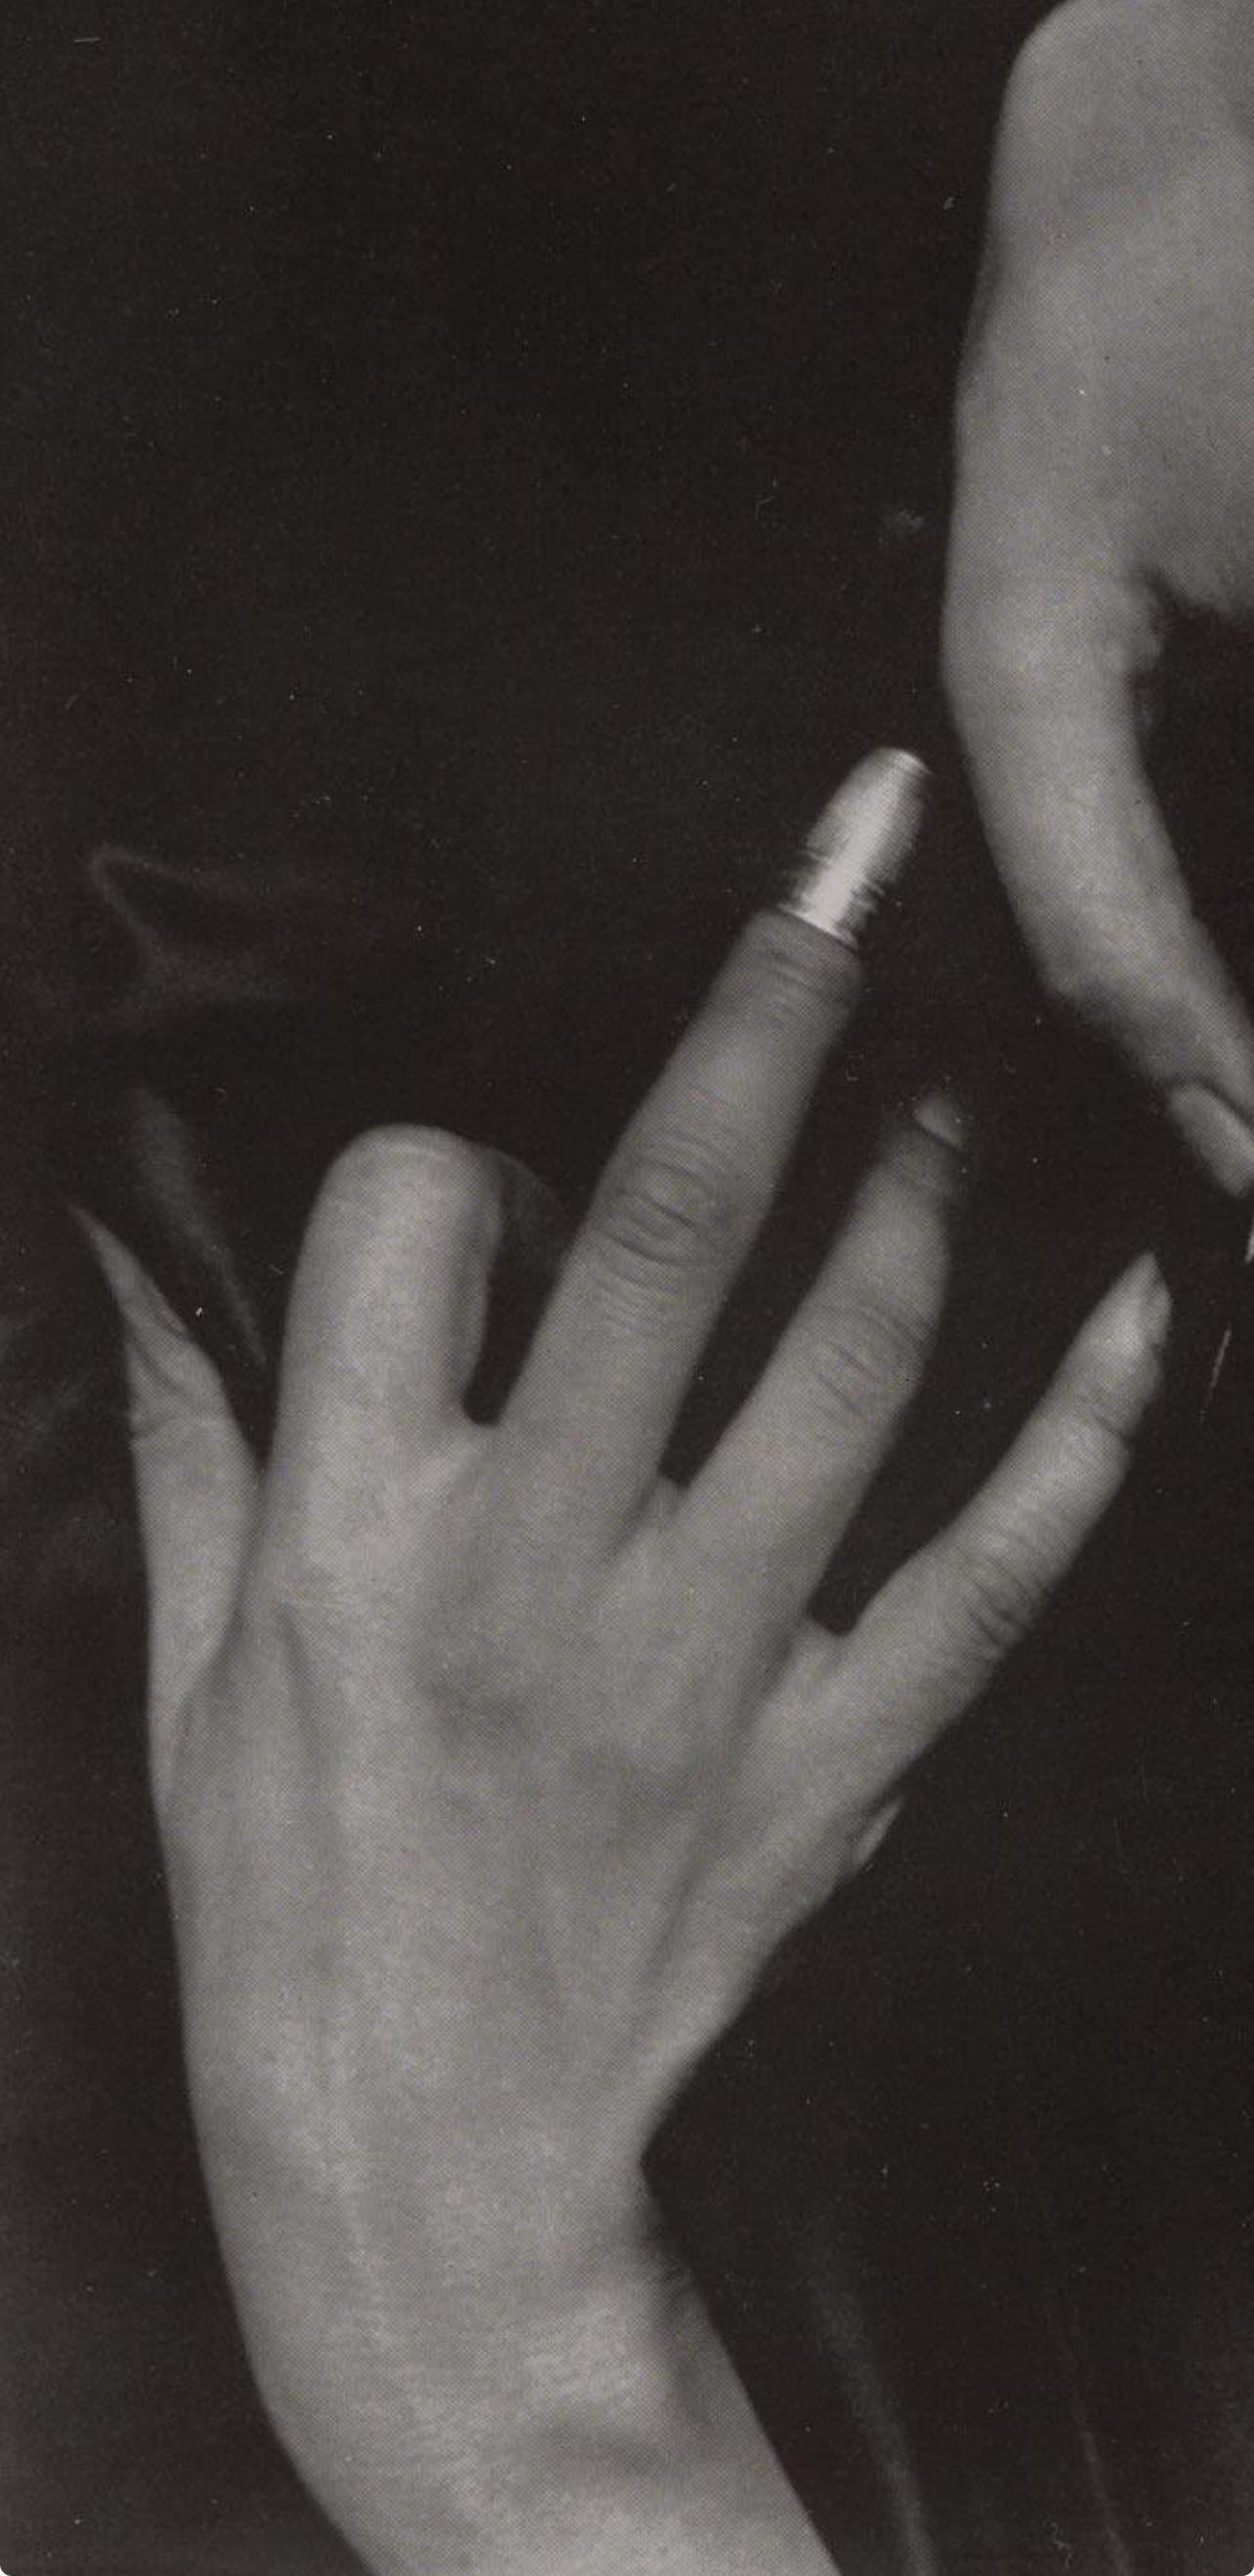 Stieglitz, O'Keeffe Hands w/Thimble, Alfred Stieglitz Memorial Portfolio (after) For Sale 1